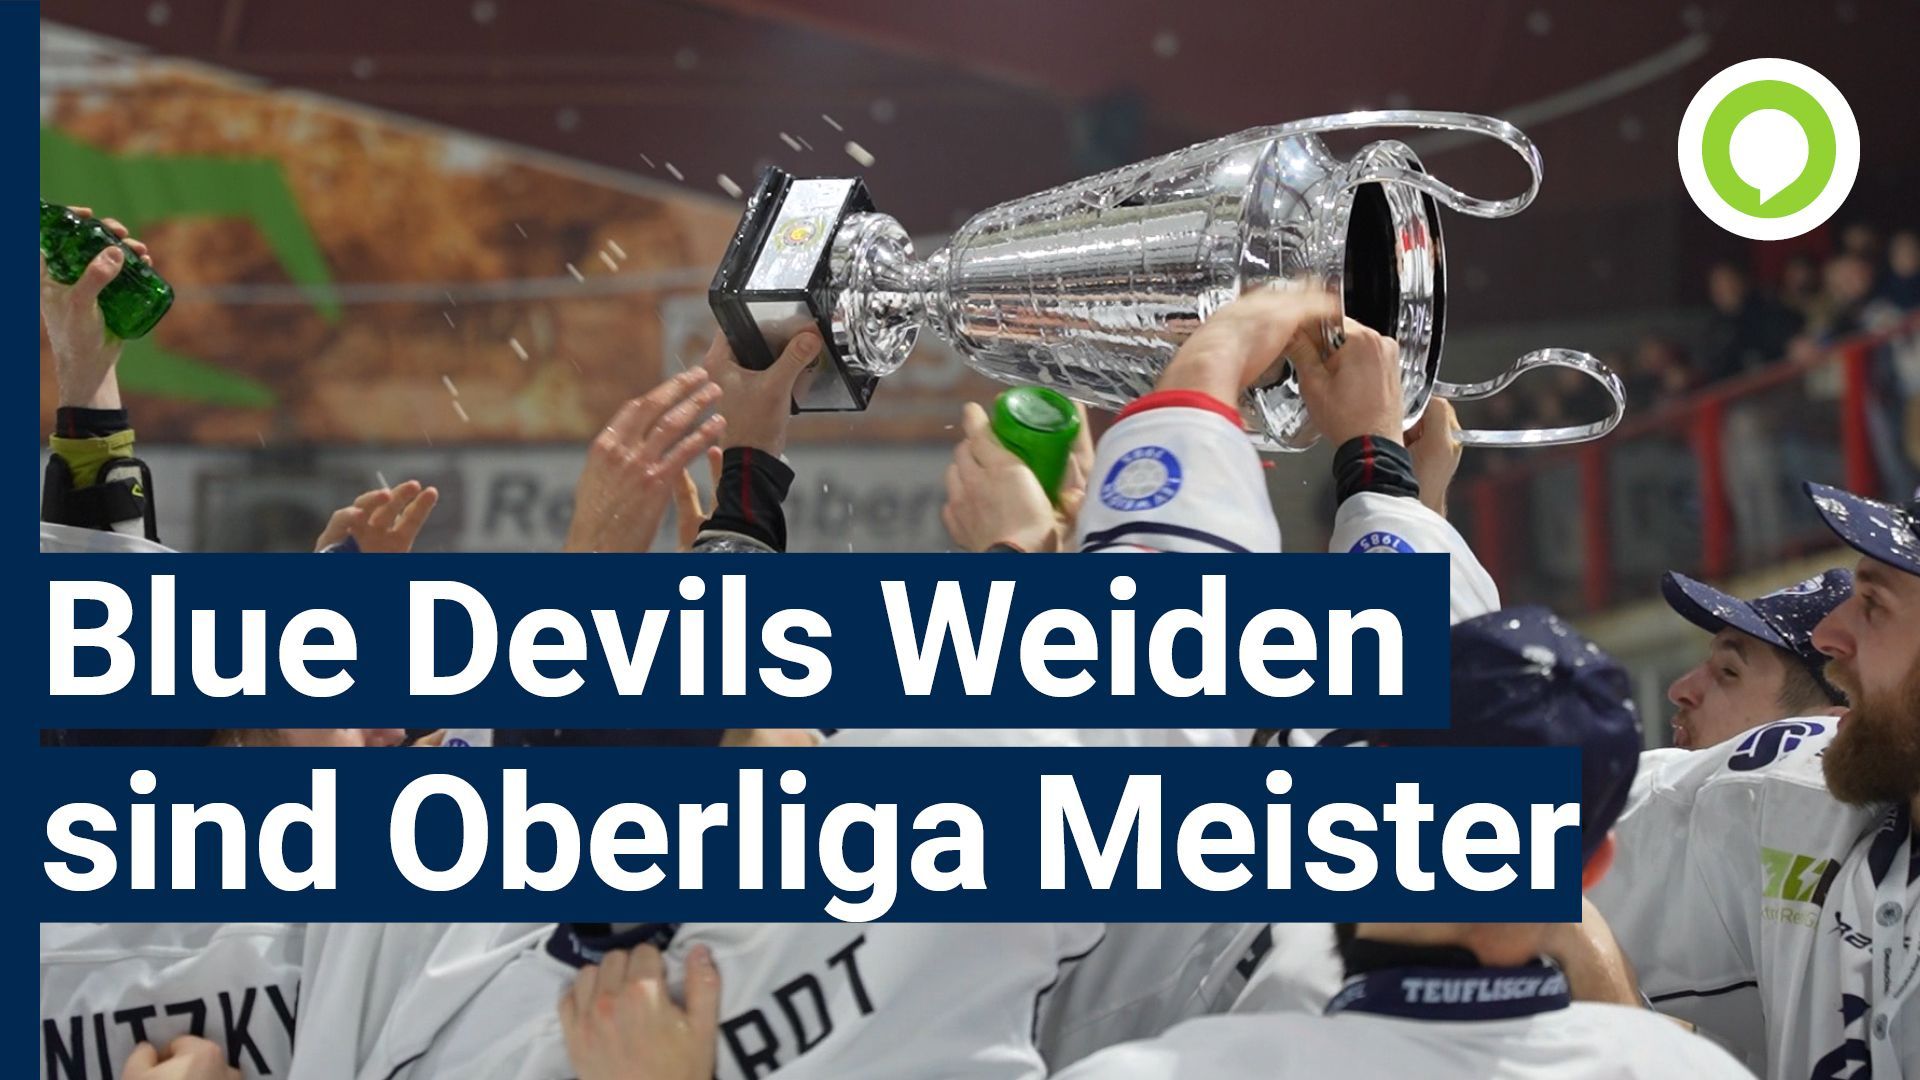 Blue Devils Weiden win the Oberliga championship in Hanover